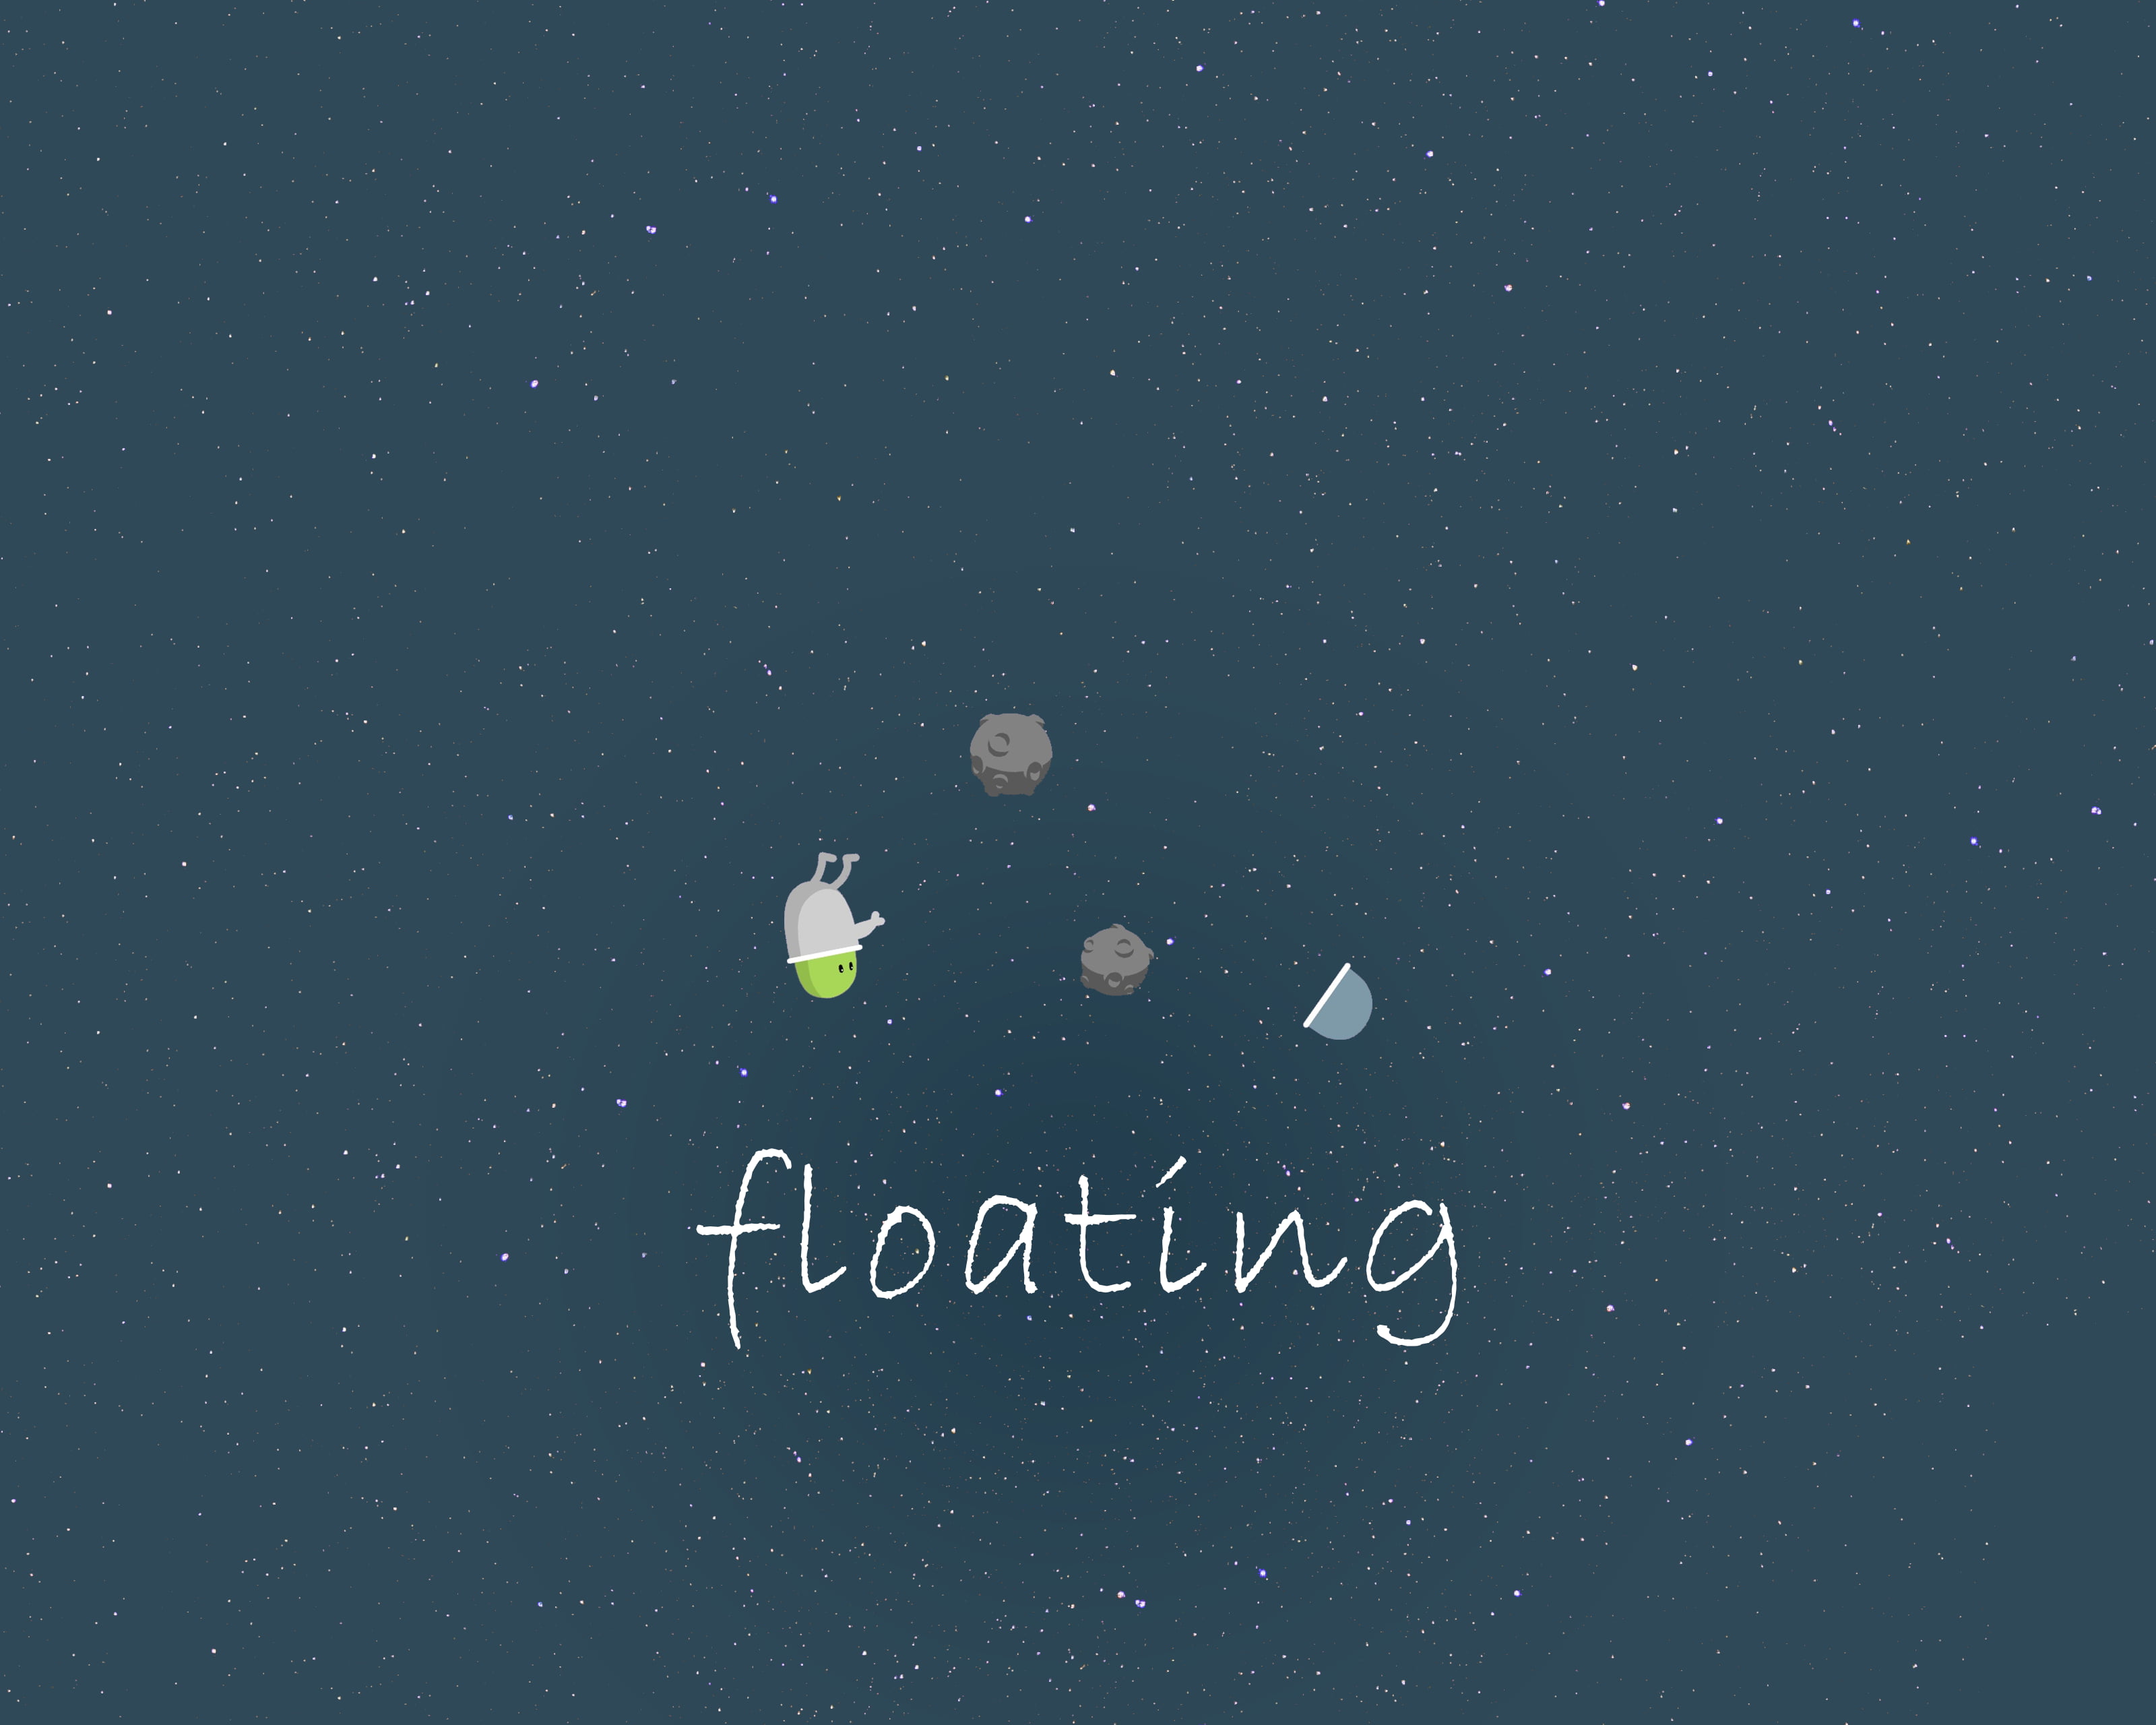 Floating illustration